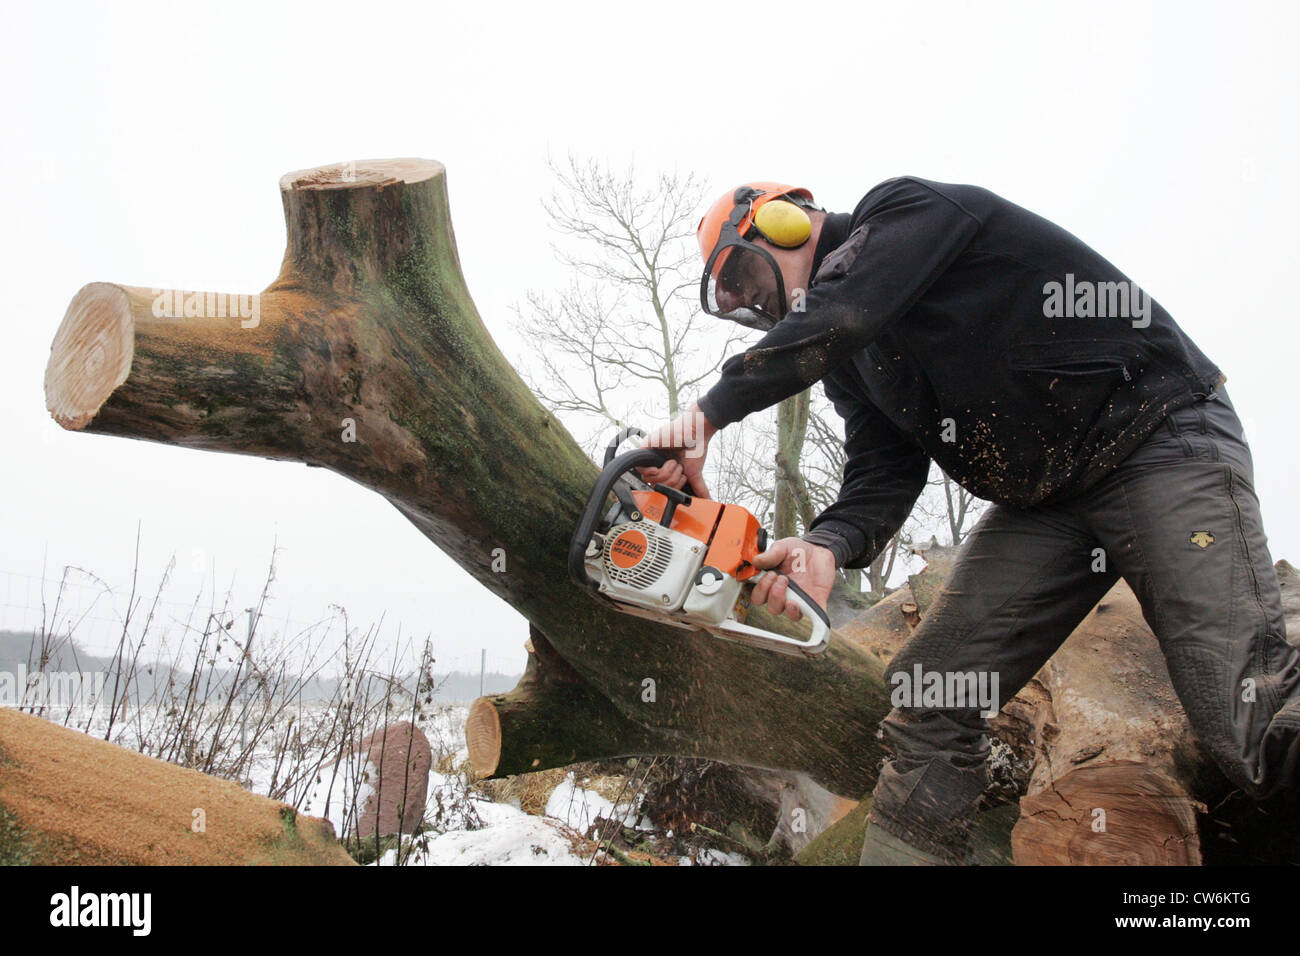 Resplendent village, a man sawing a tree trunk Stock Photo